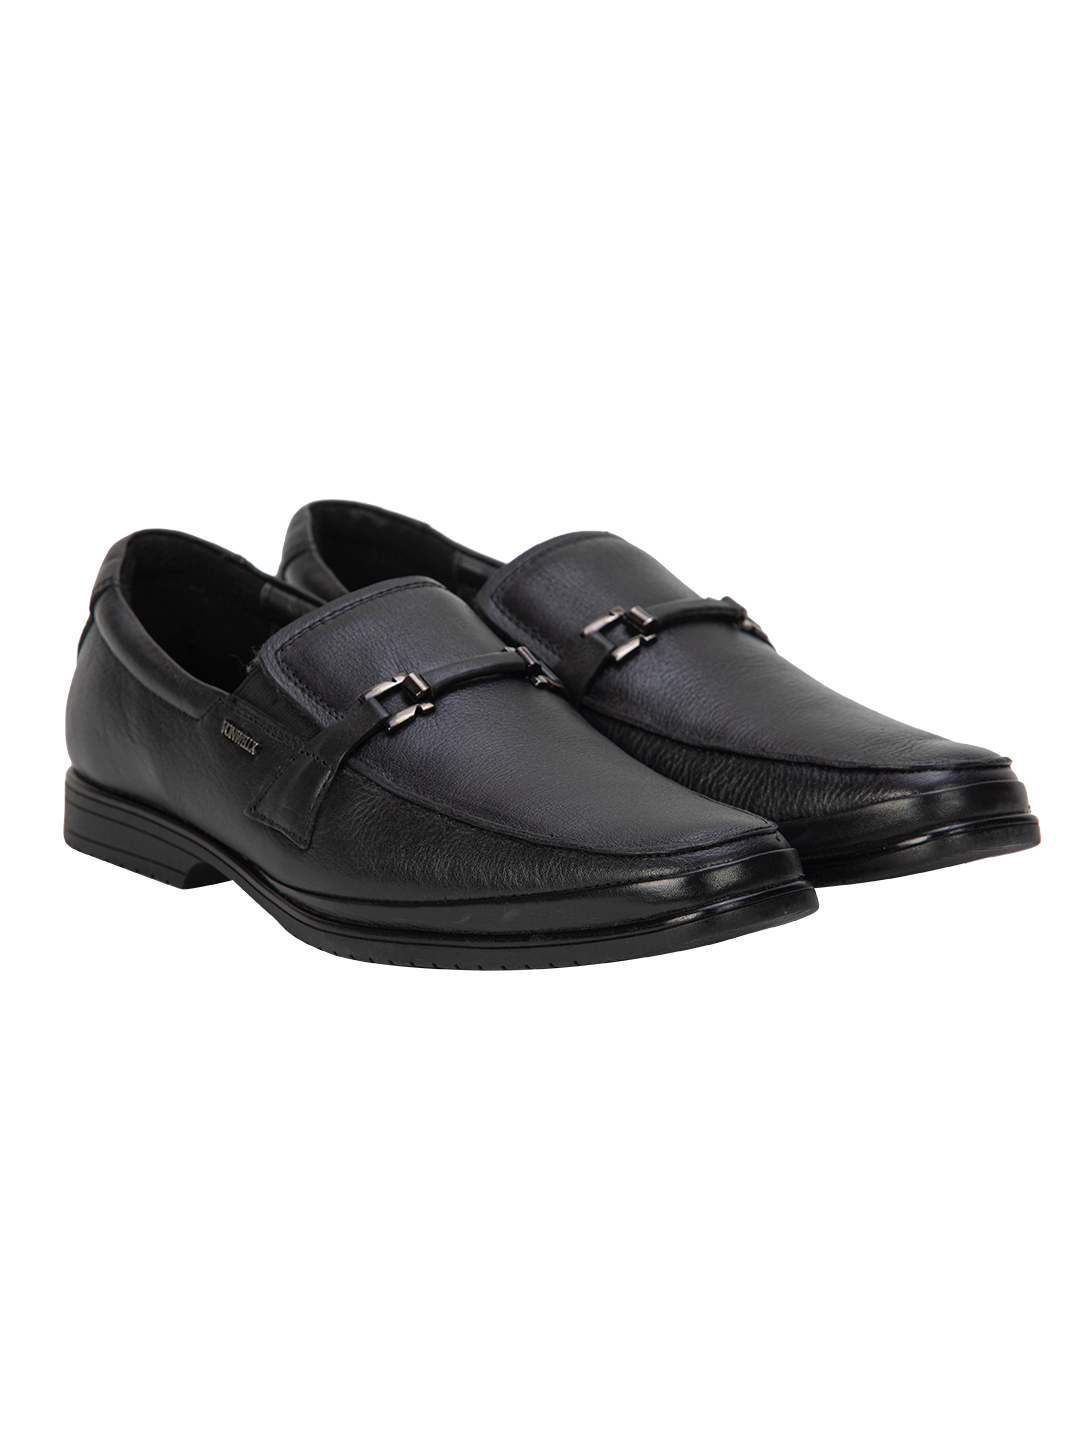 Buy Von Wellx Germany Comfort Black Jace Shoes Online in Aurangabad